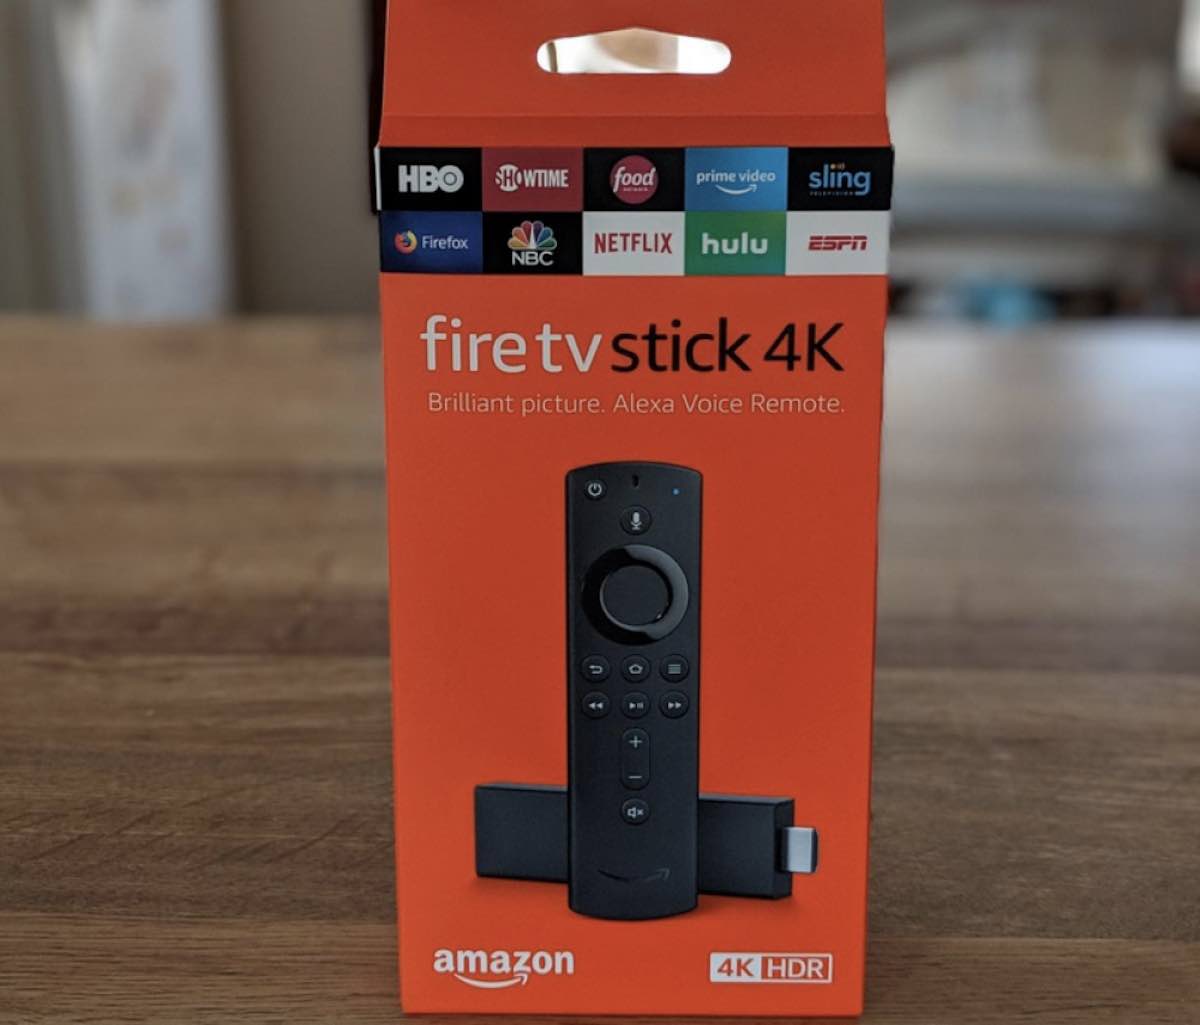 Amazon Fire TV Stick 4K in orange packaging sitting on a tabletop